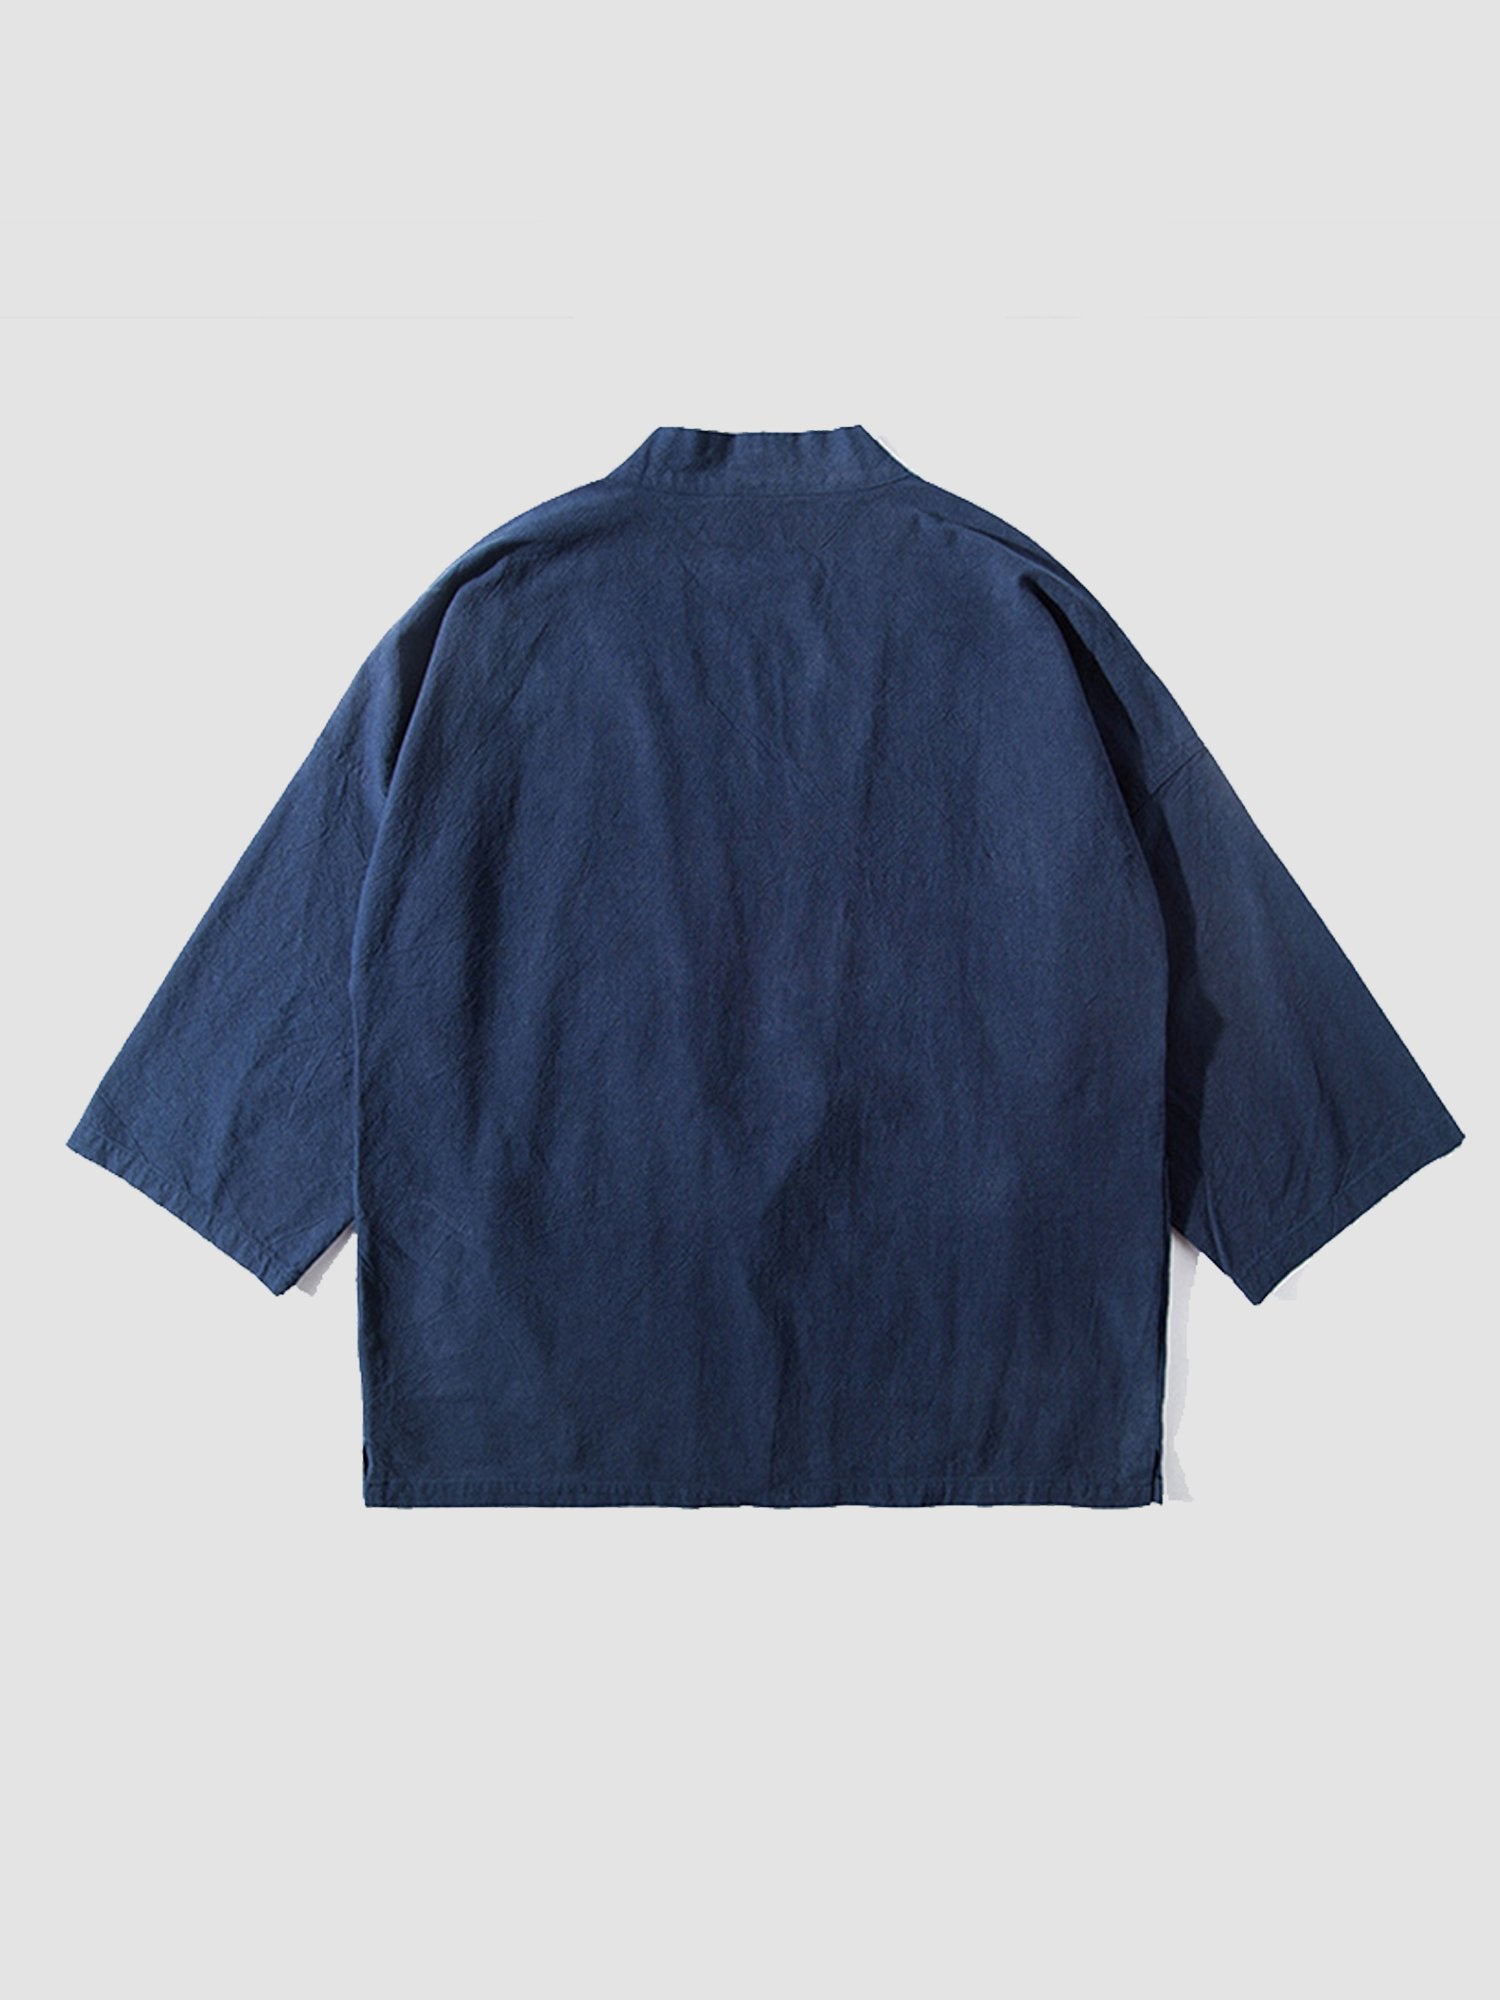 JUSTNOTAG Thin Kimono Cardigan Half Sleeve Shirts